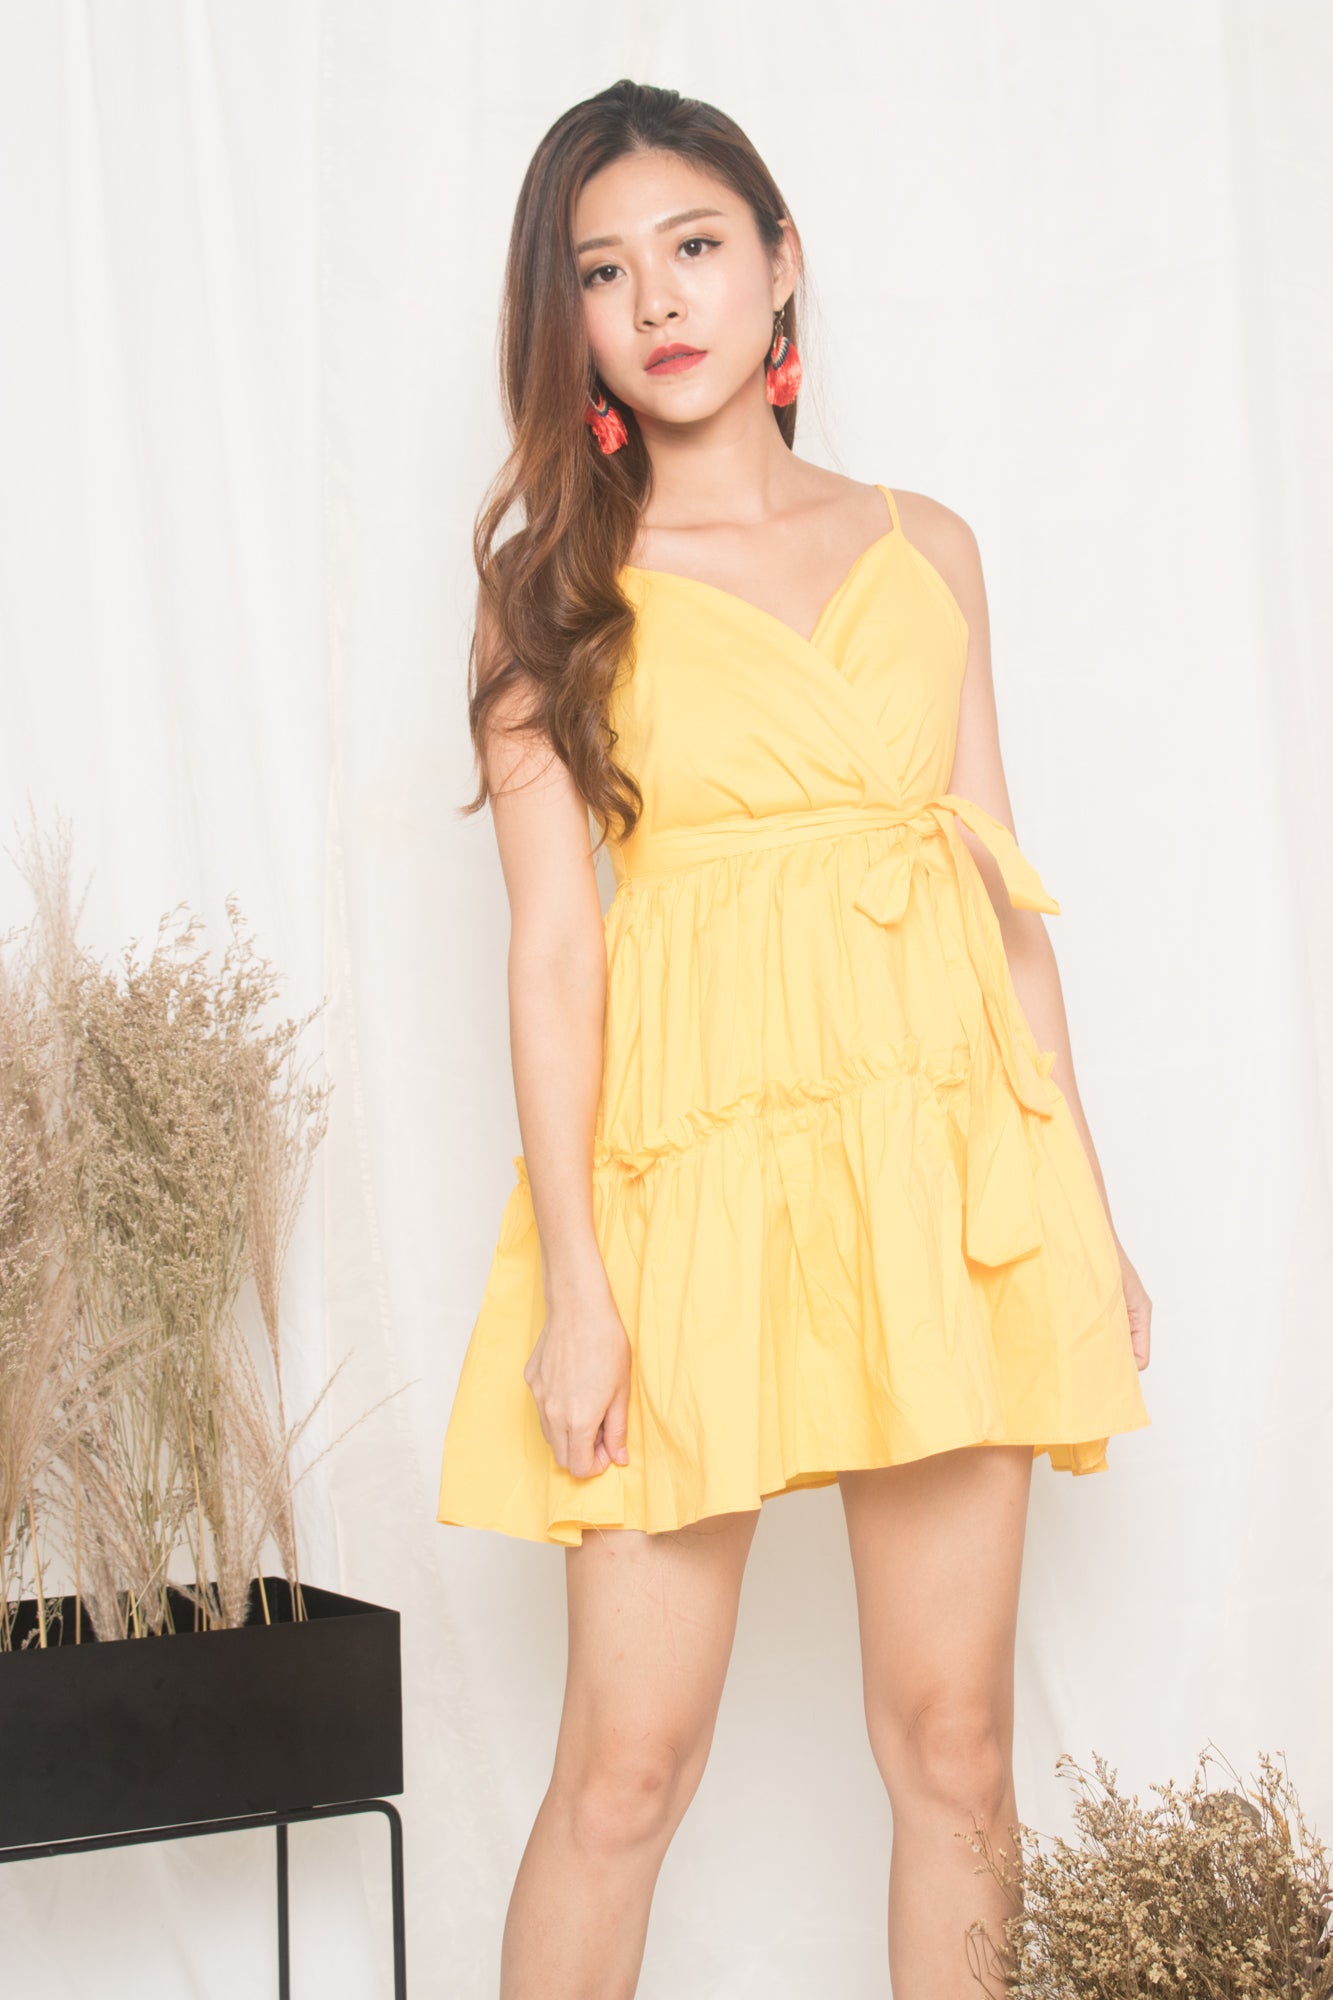 Oksar Layer Dress in Yellow